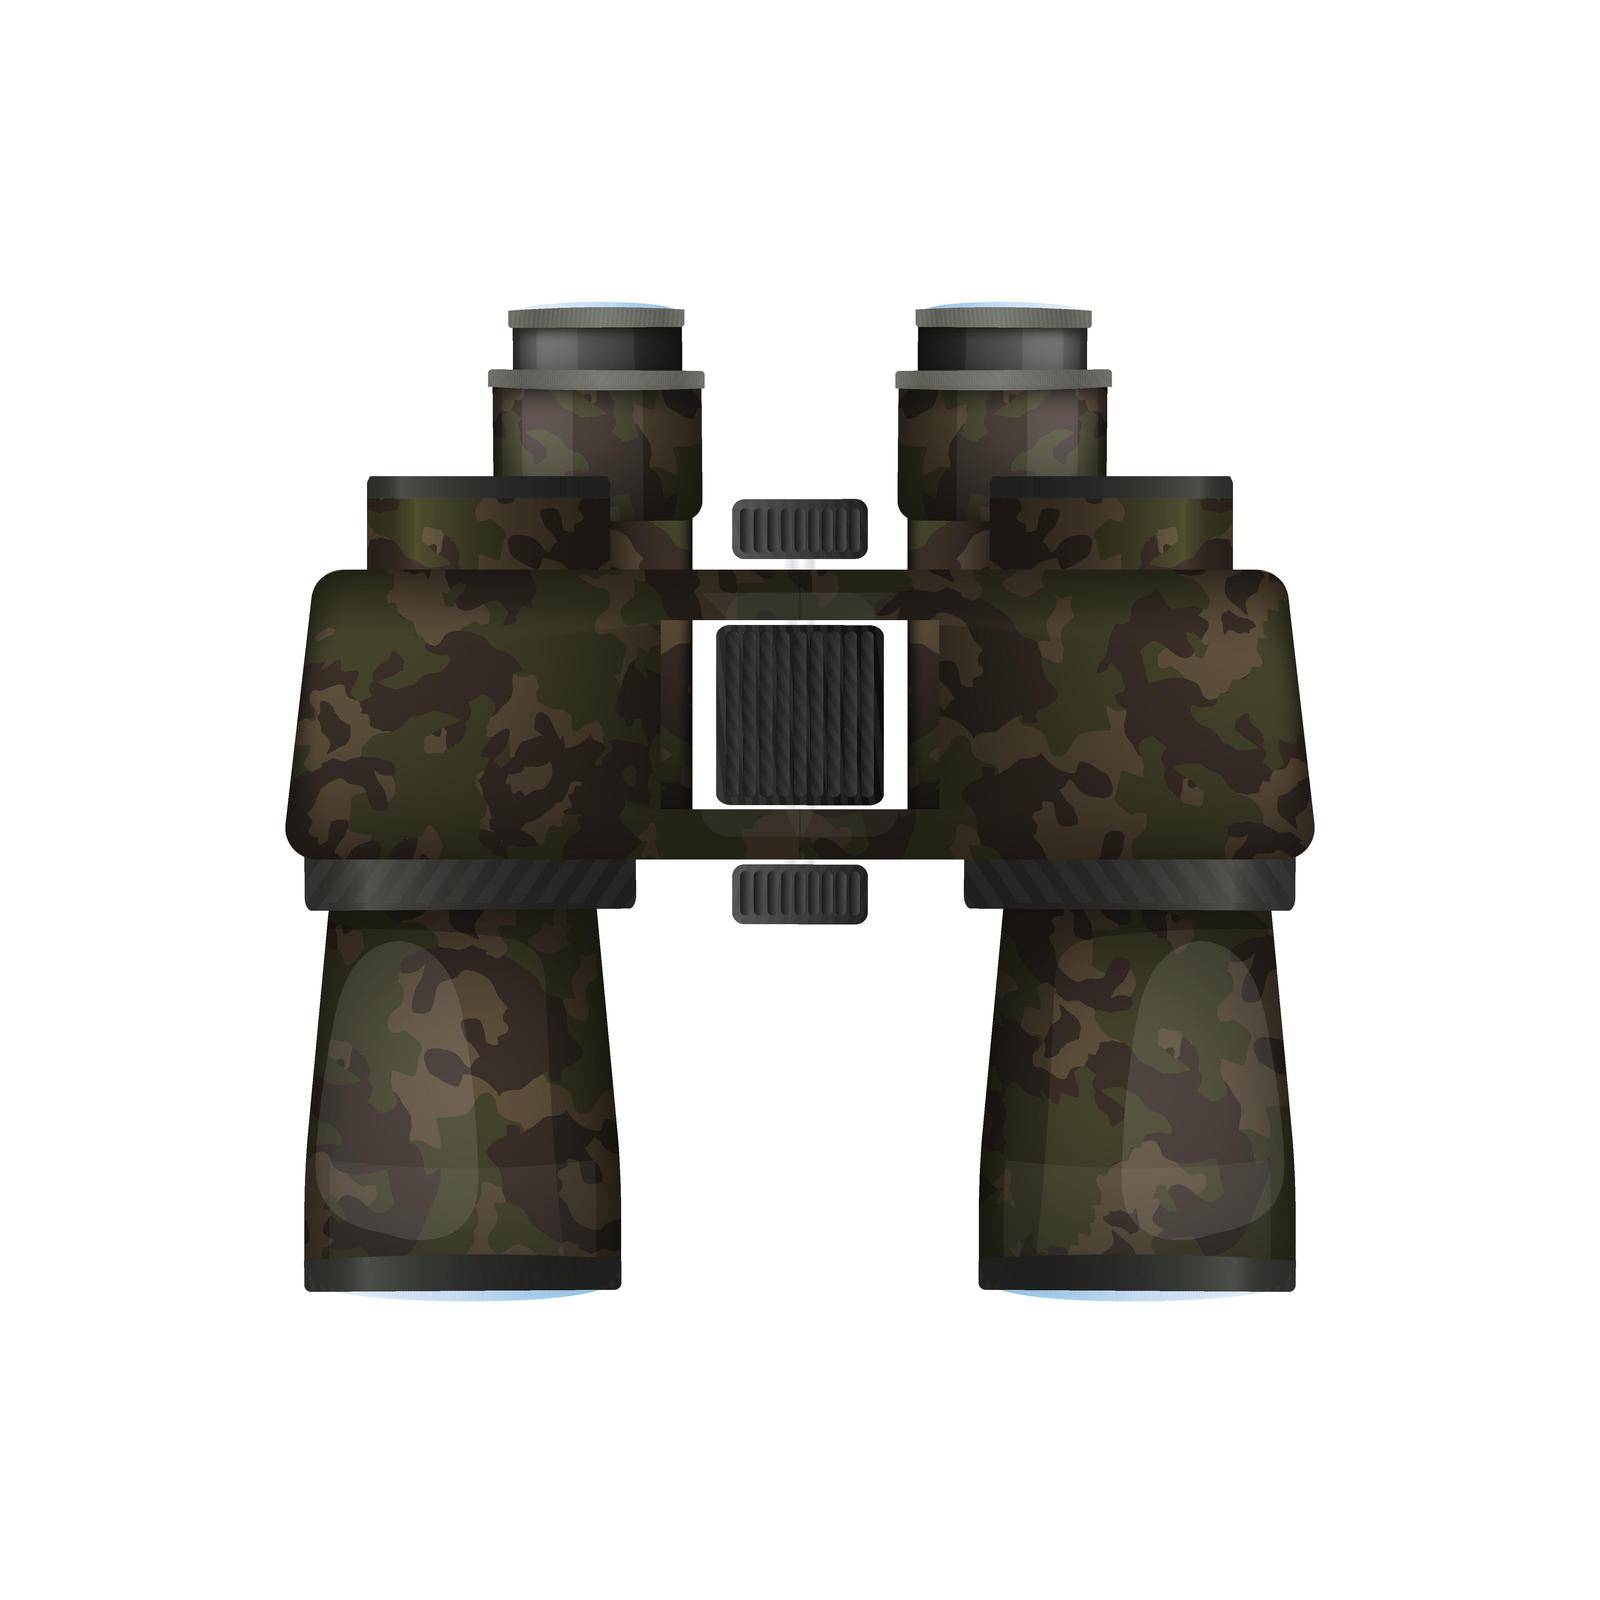 Black binoculars in a realistic style. Vector illustration.